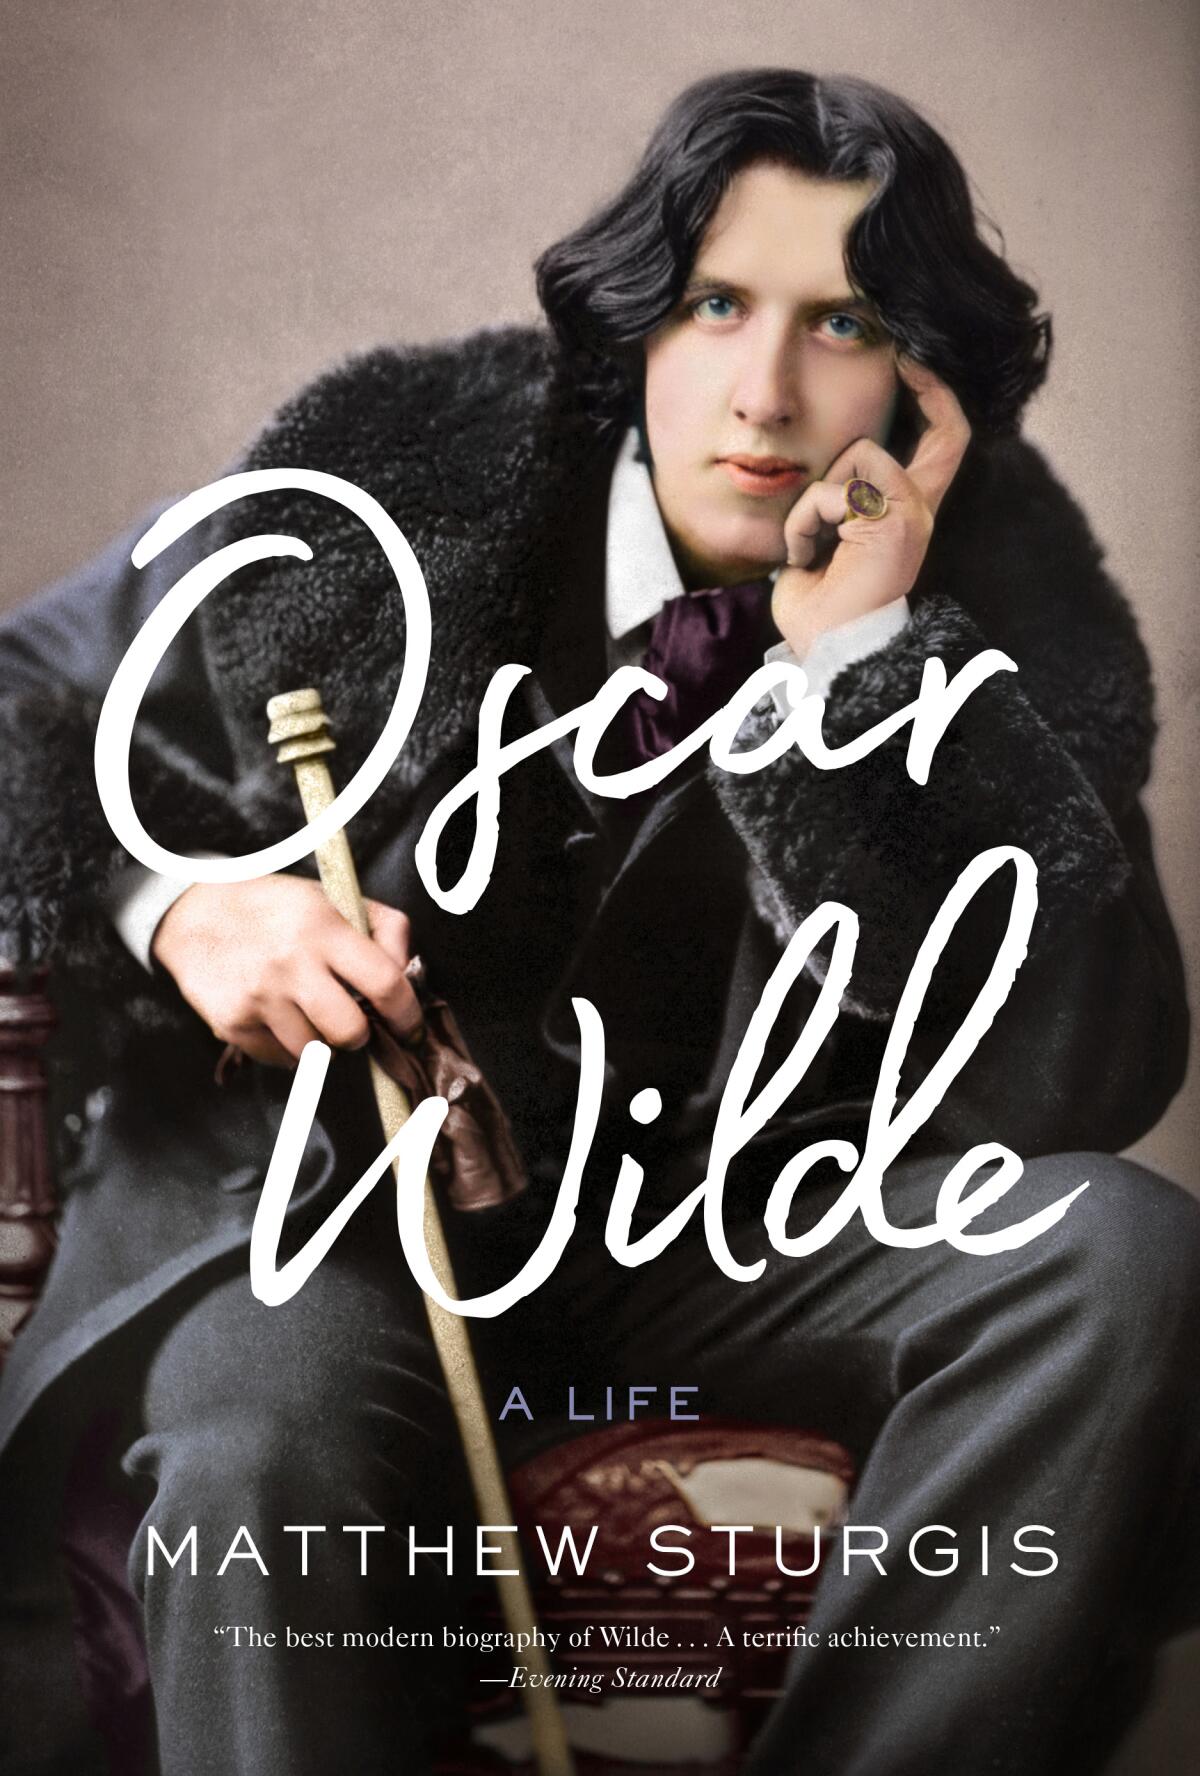 "Oscar Wilde: A Life," by Matthew Sturgis